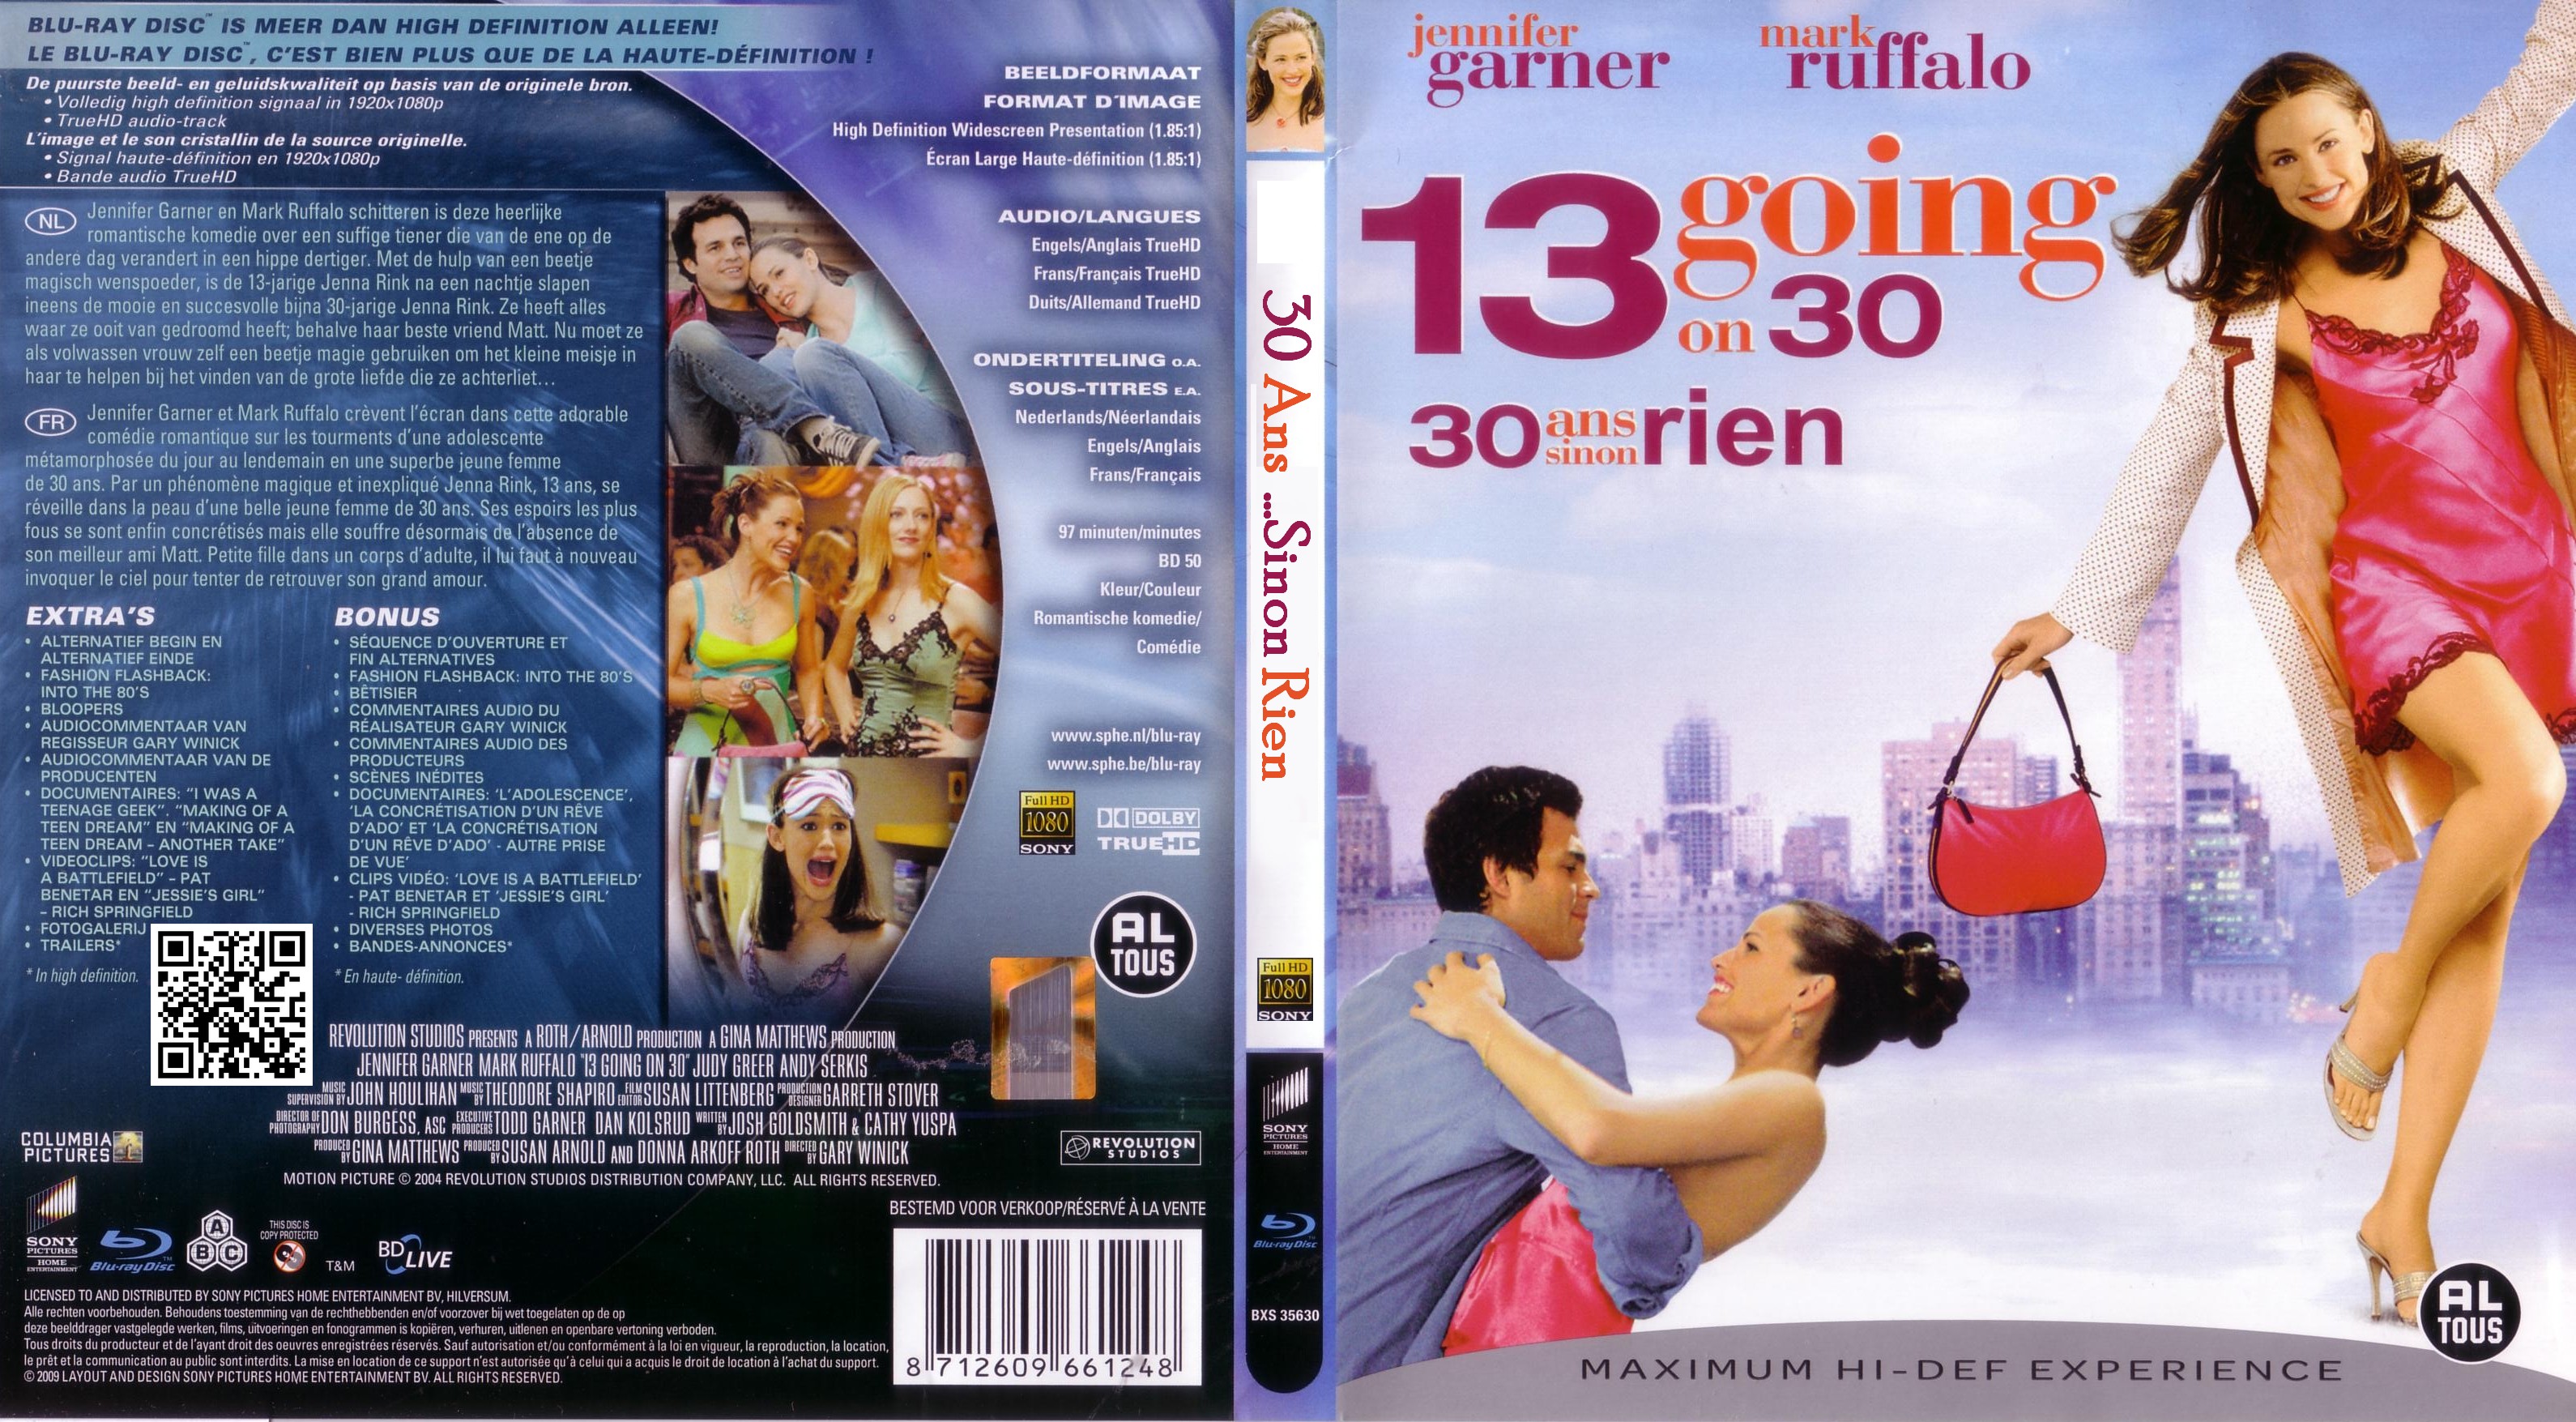 Jaquette DVD 30 ans sinon rien (BLU-RAY)